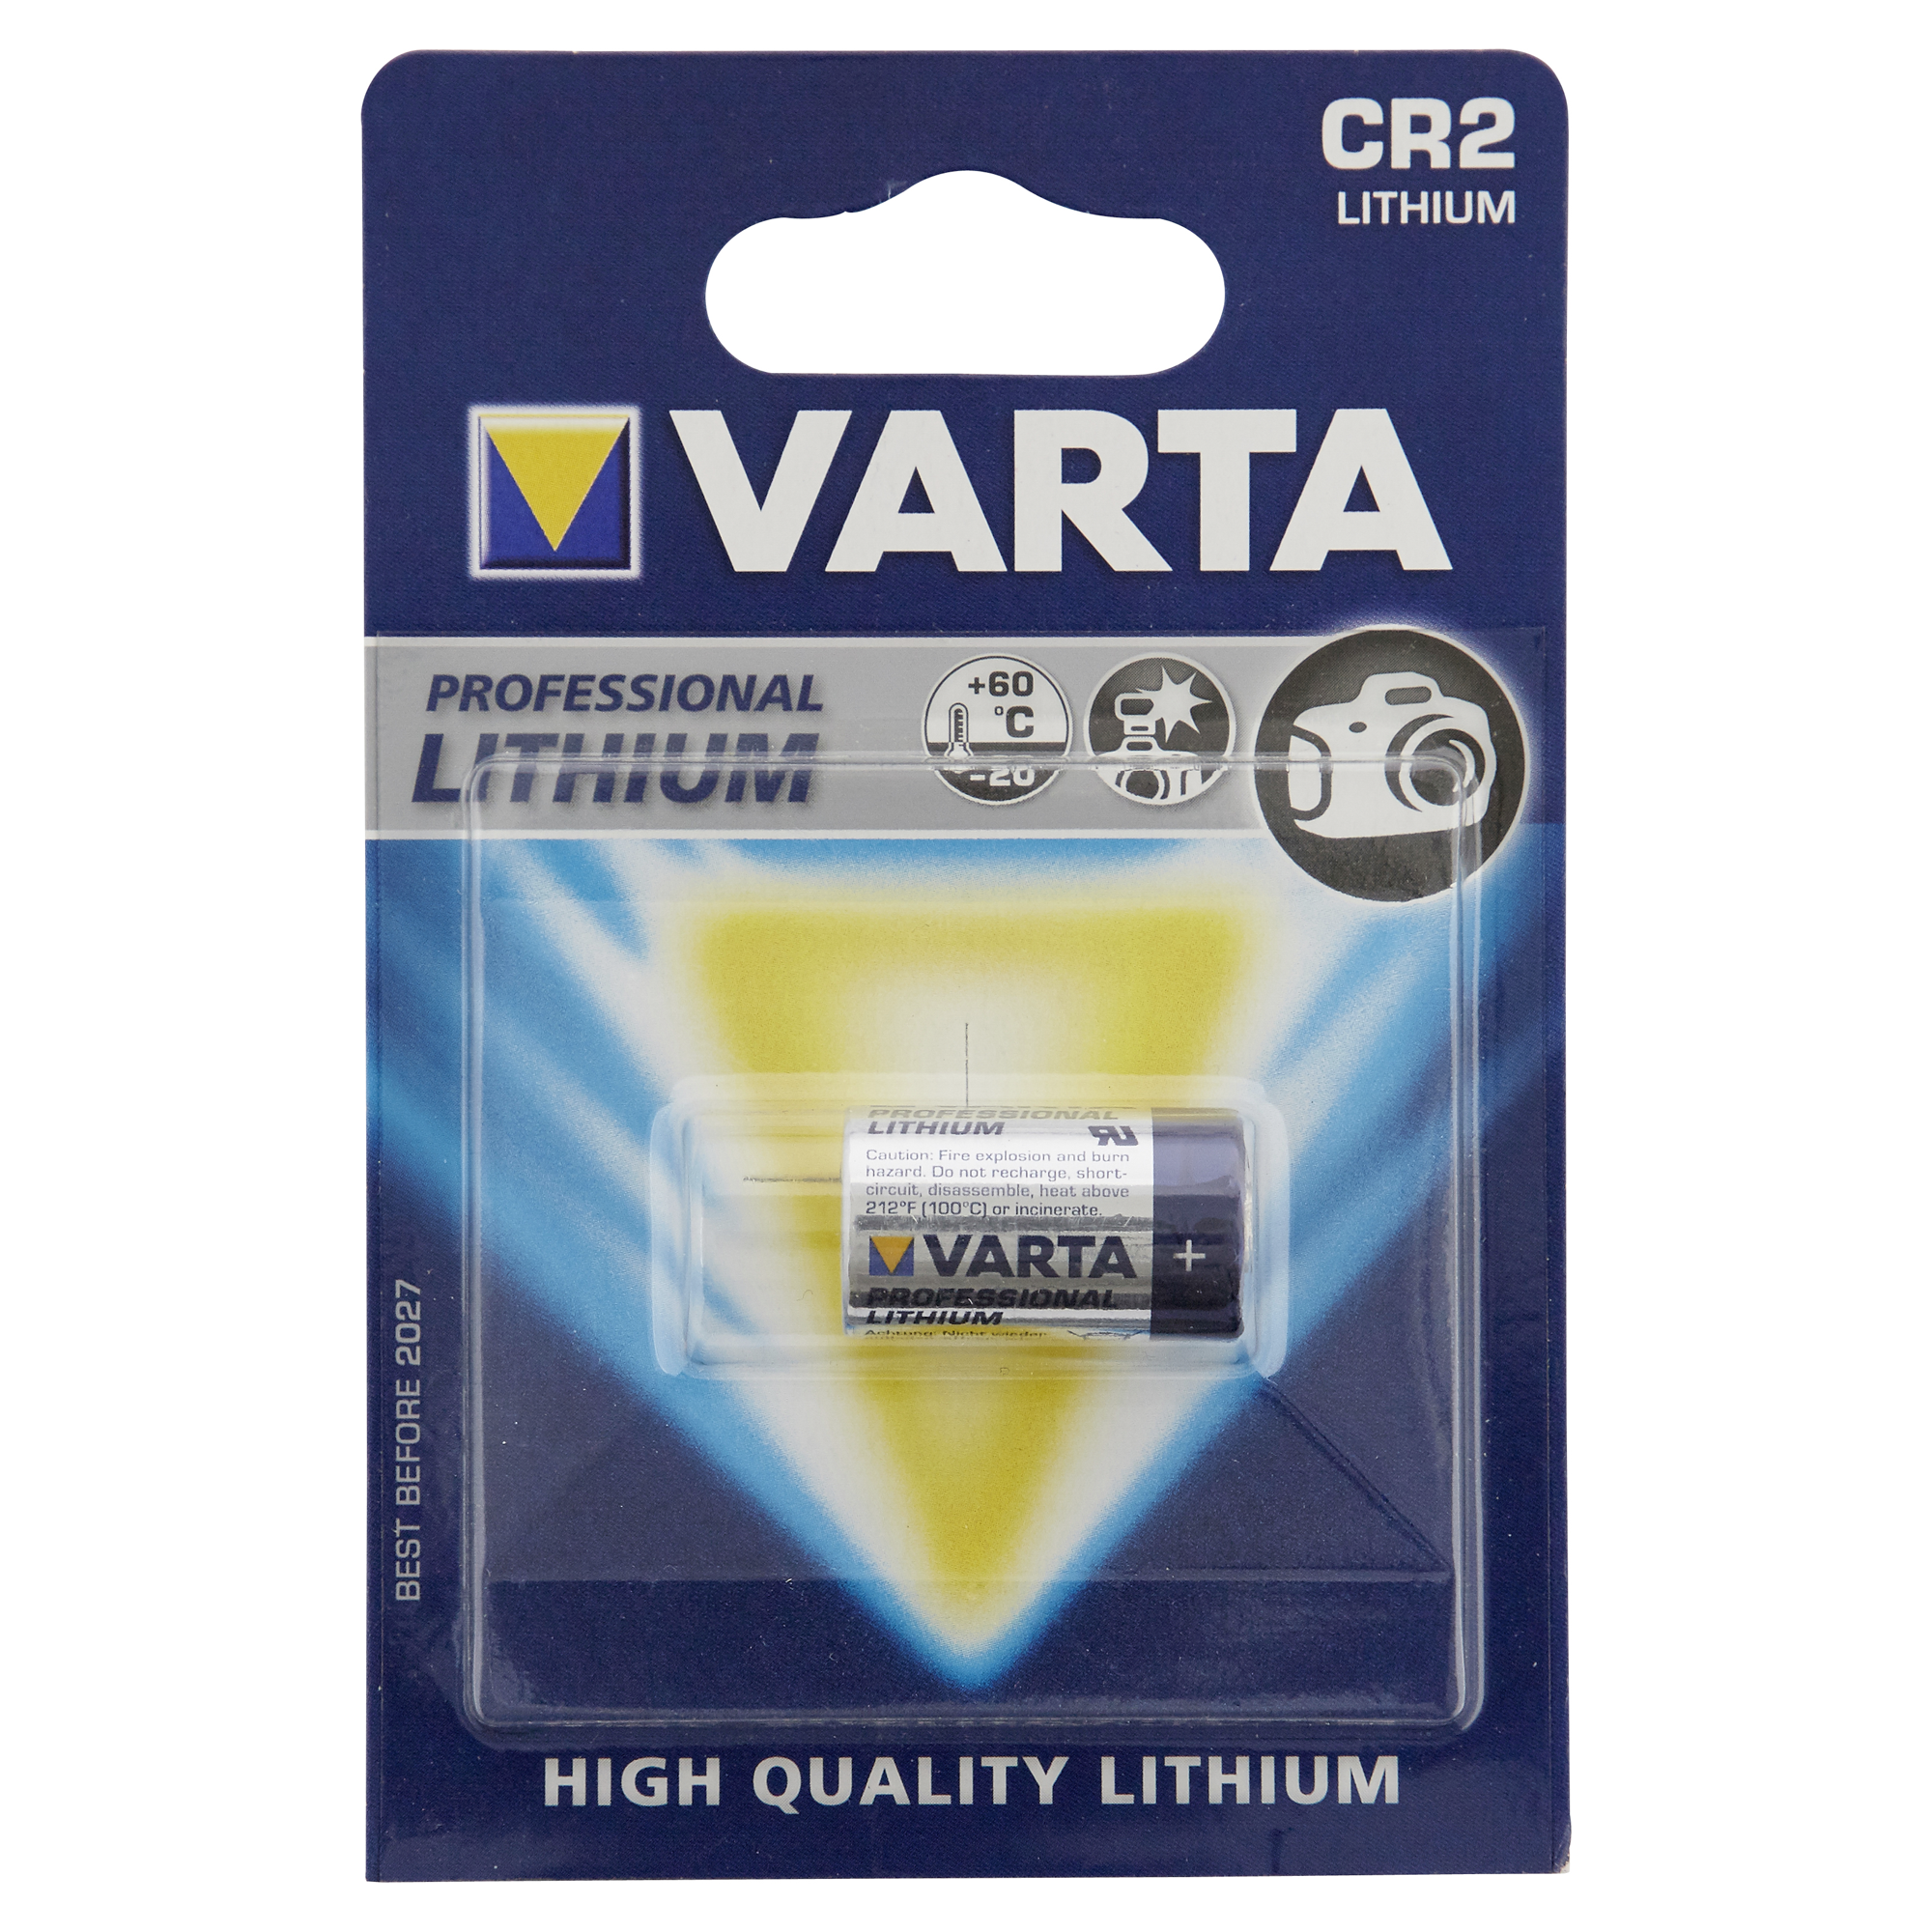 Fotobatterie CR2 Lithium 1 Stück + product picture